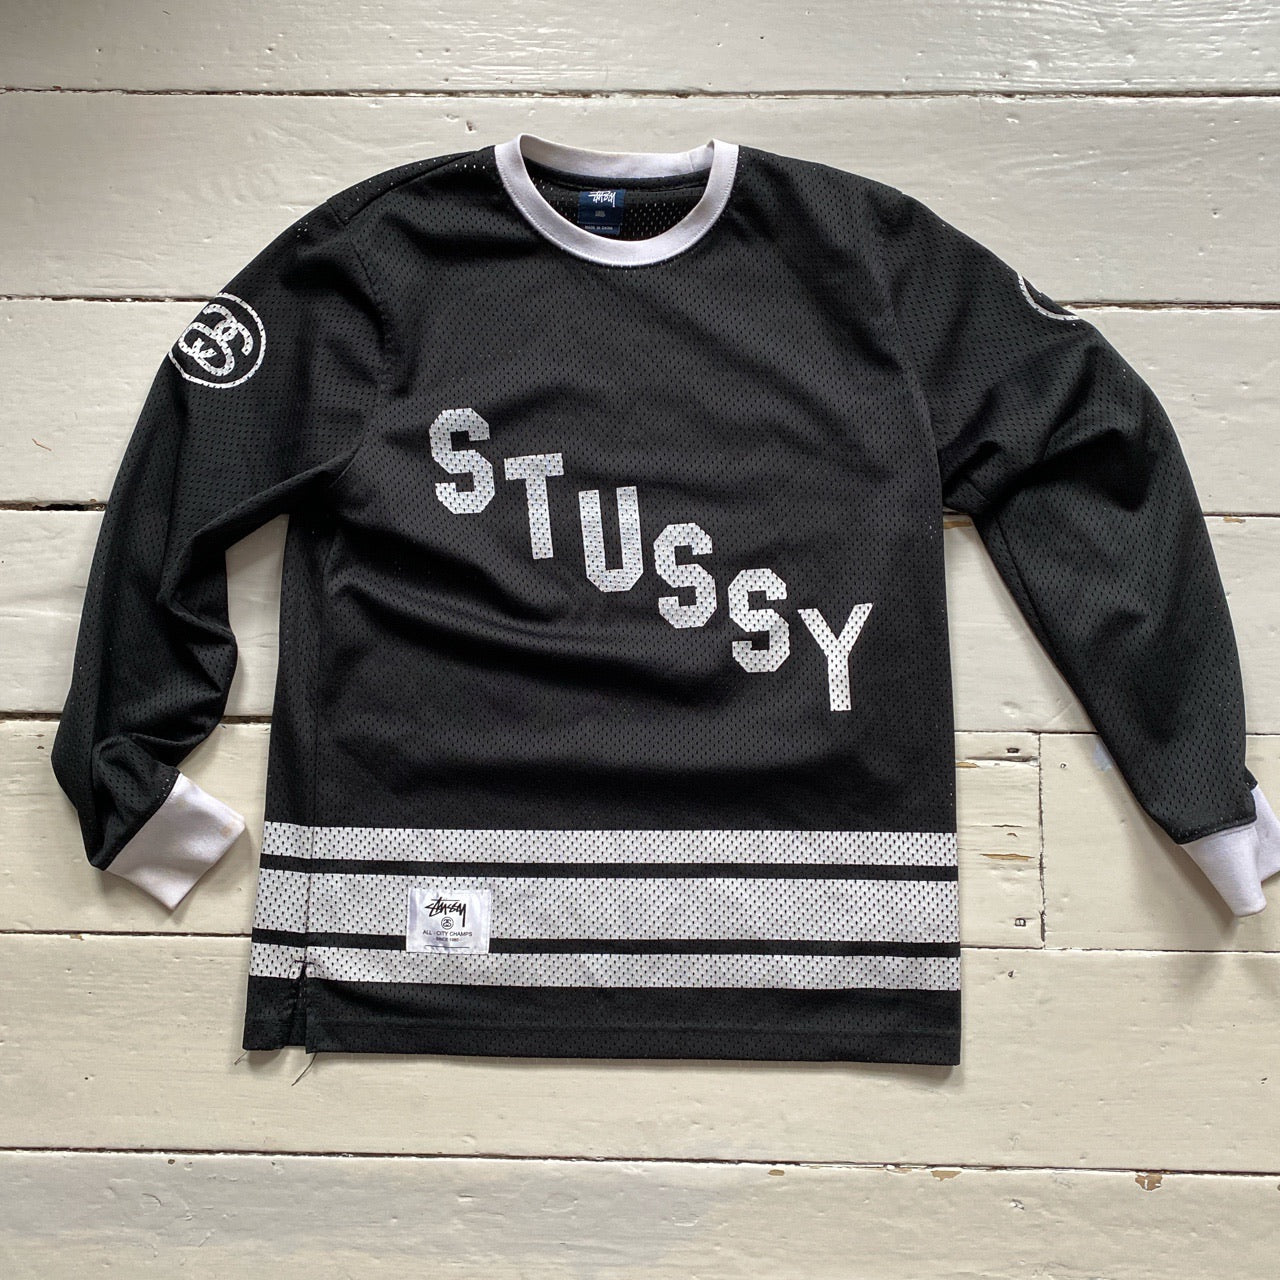 Stussy NFL Jersey (Small)